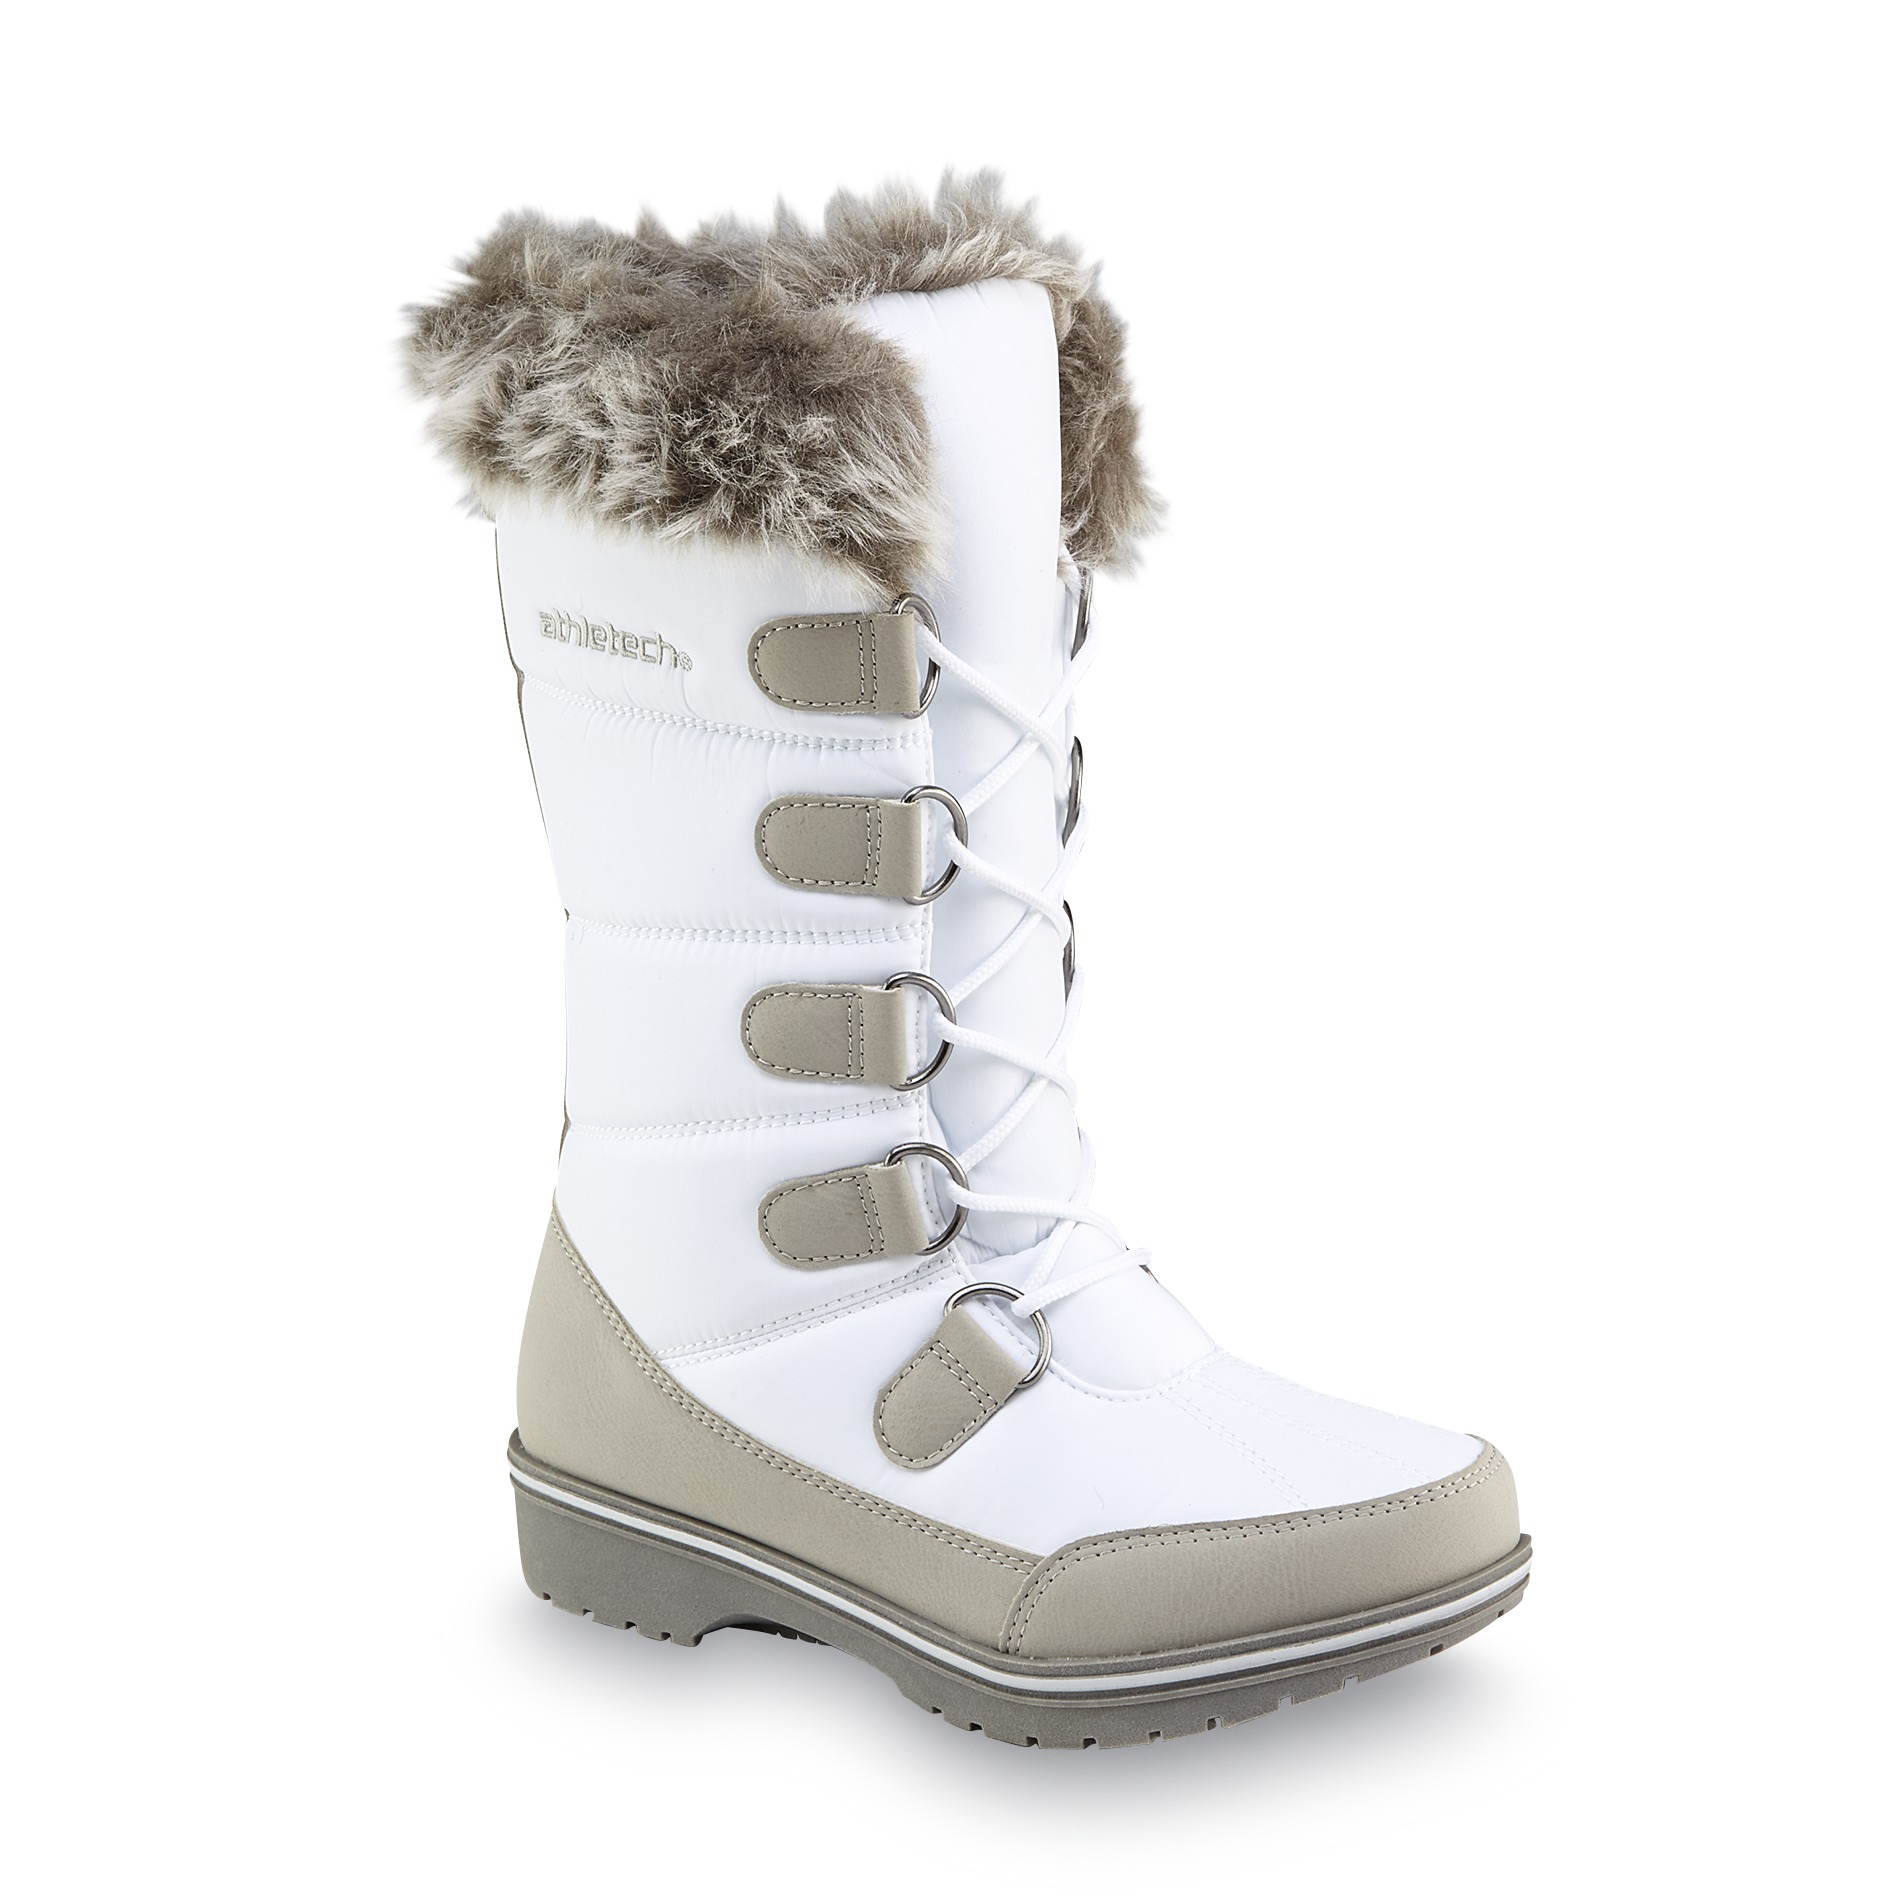 Womens Snow Boots On Sale o7w7MX5a